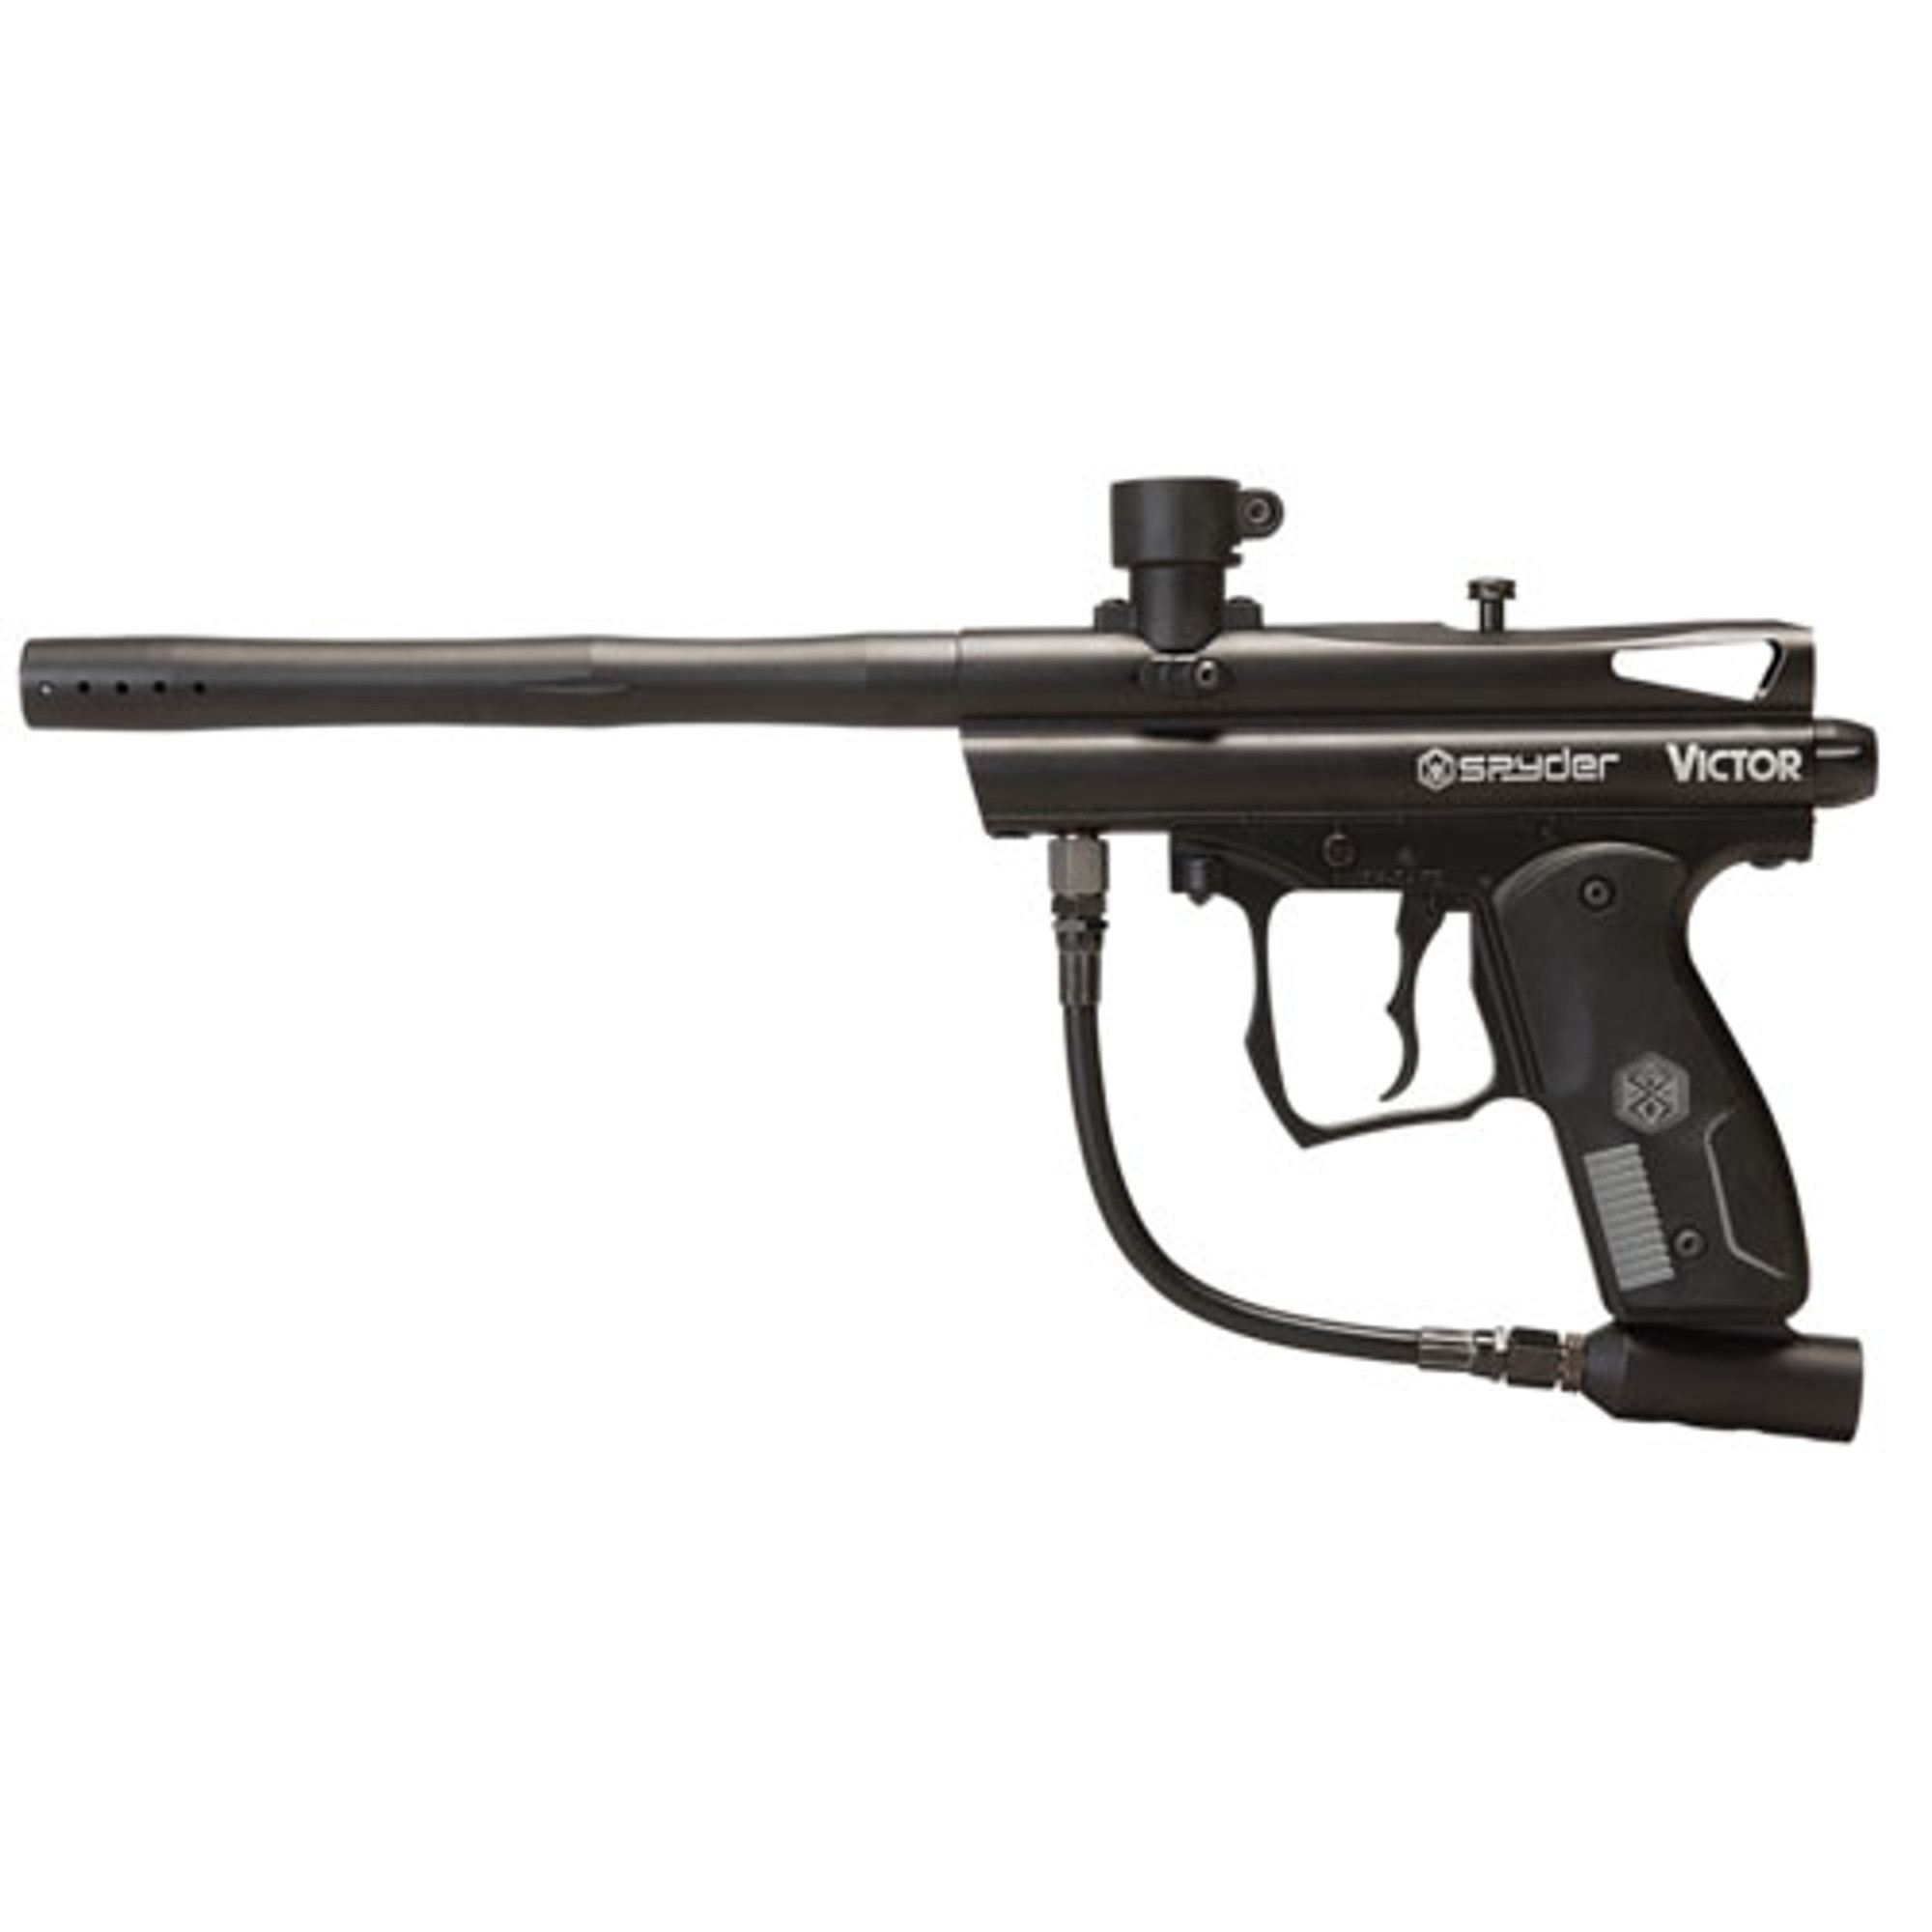 Spyder Victor Paintball Gun - Black